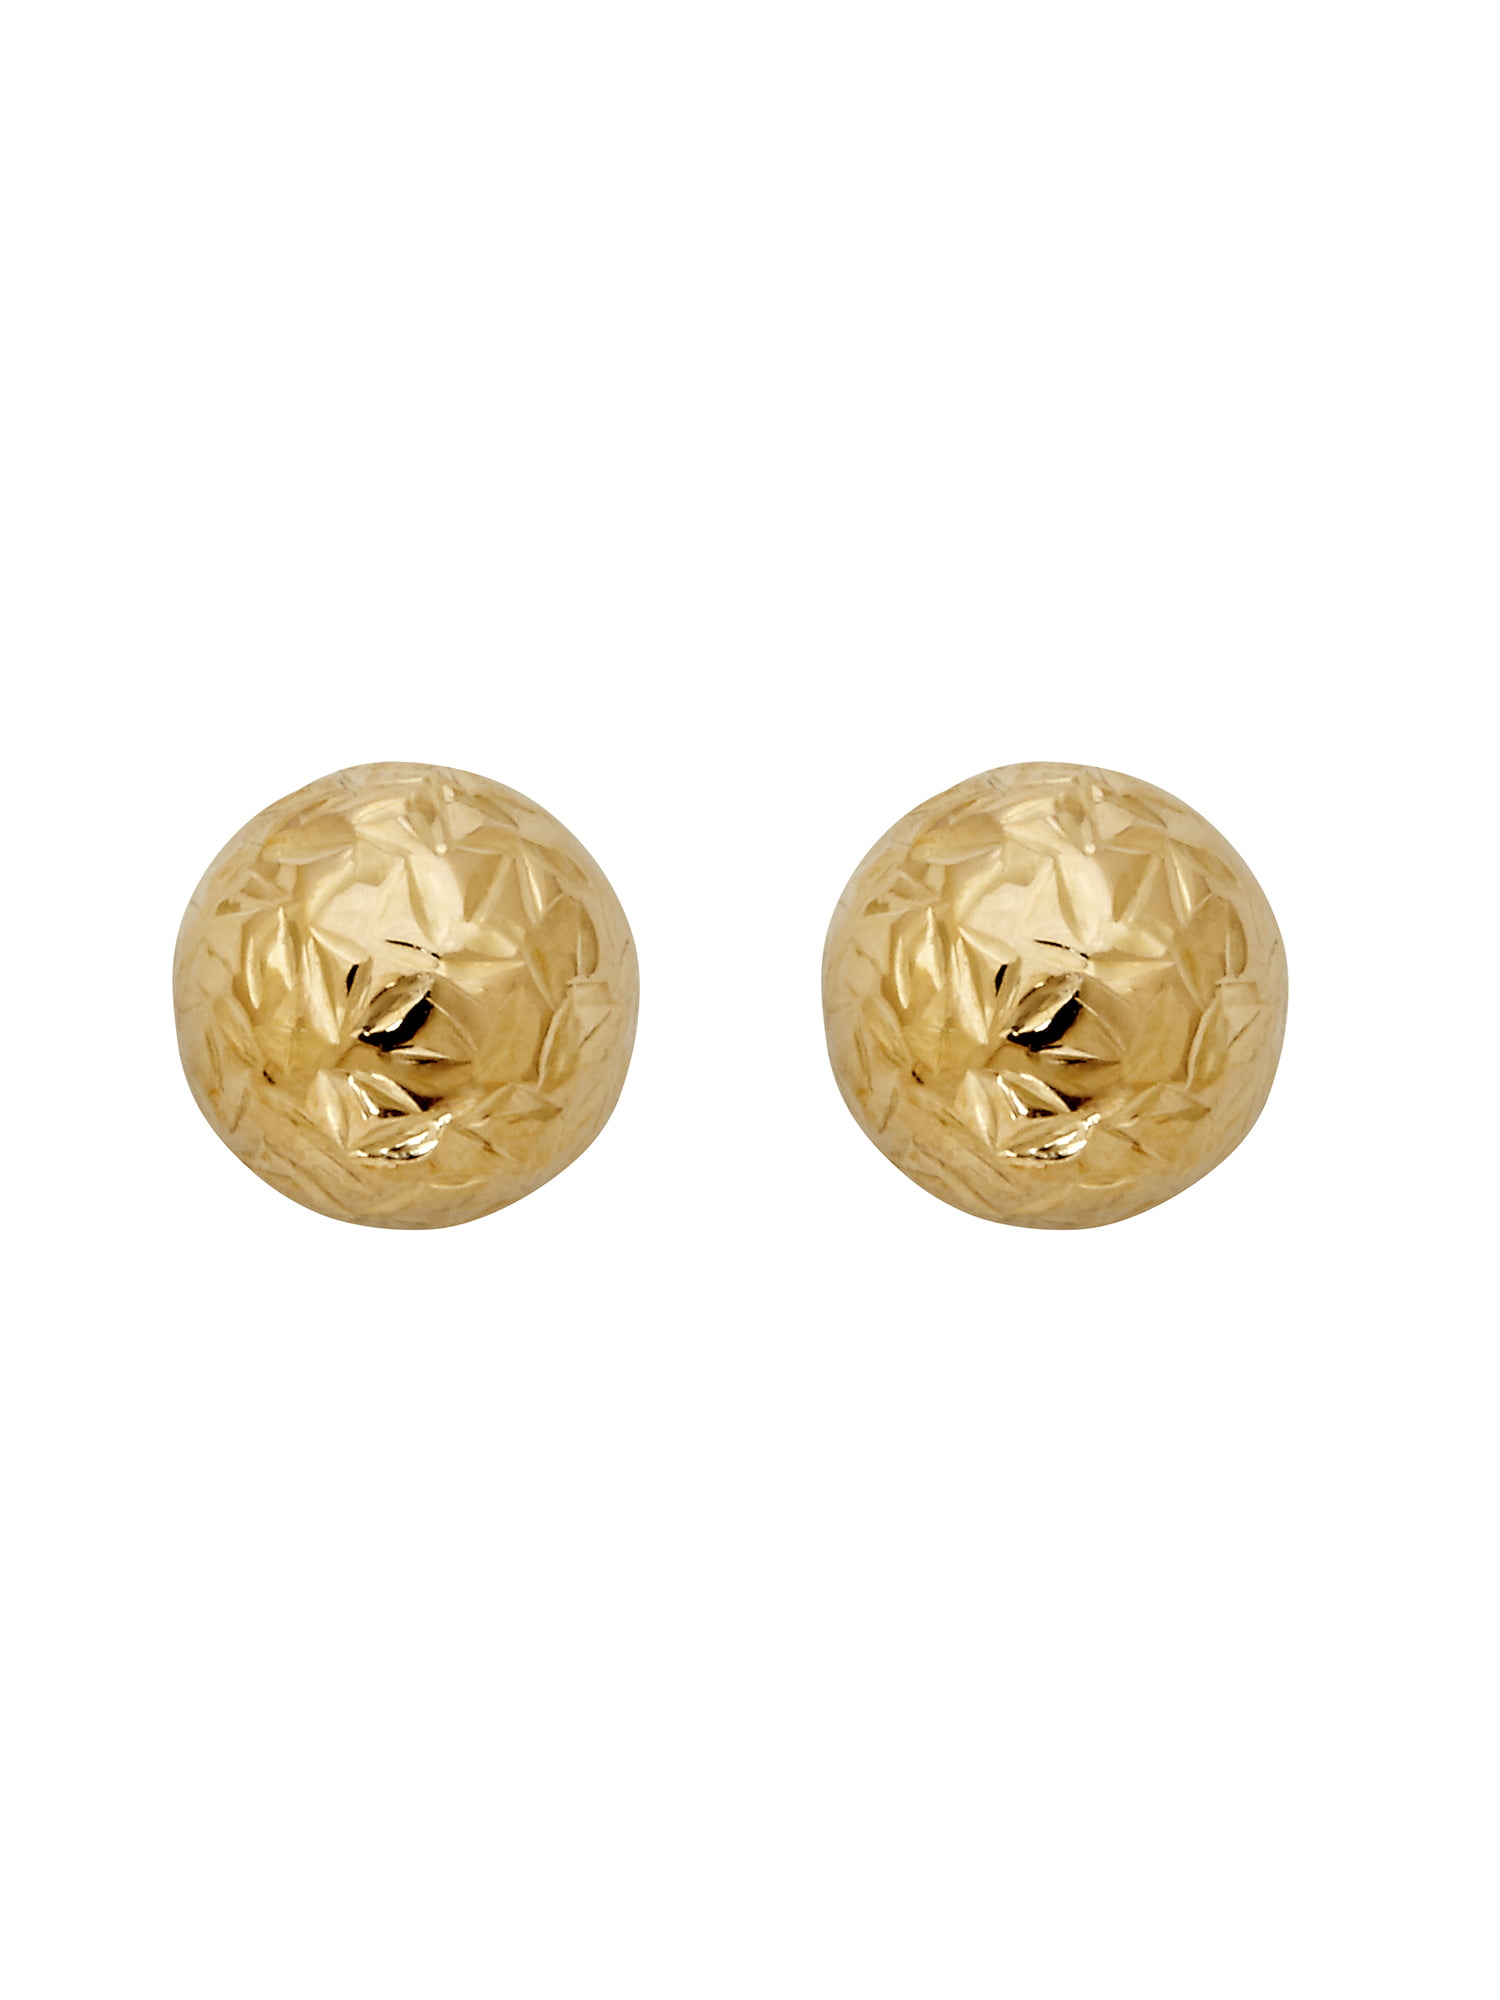 Brilliance Fine Jewelry 10K Yellow Gold 6MM Hollow Ball Studs 